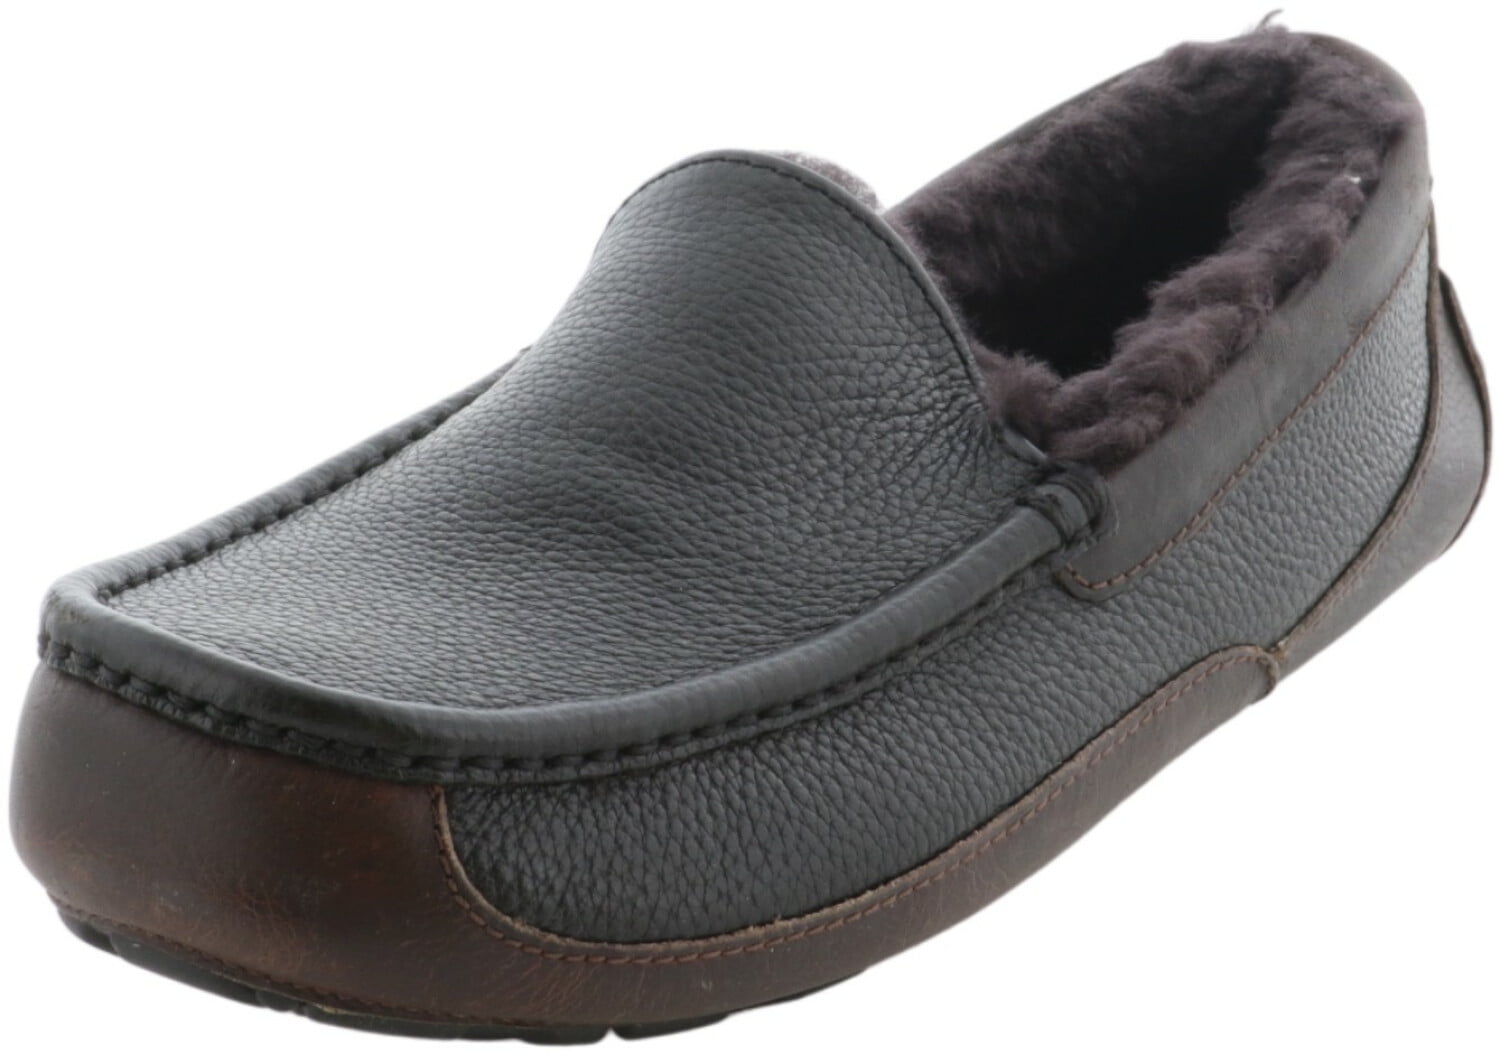 Ugg Men's Ascot Black / China Teal Ankle-High Wool Slipper - 8M - Walmart.com